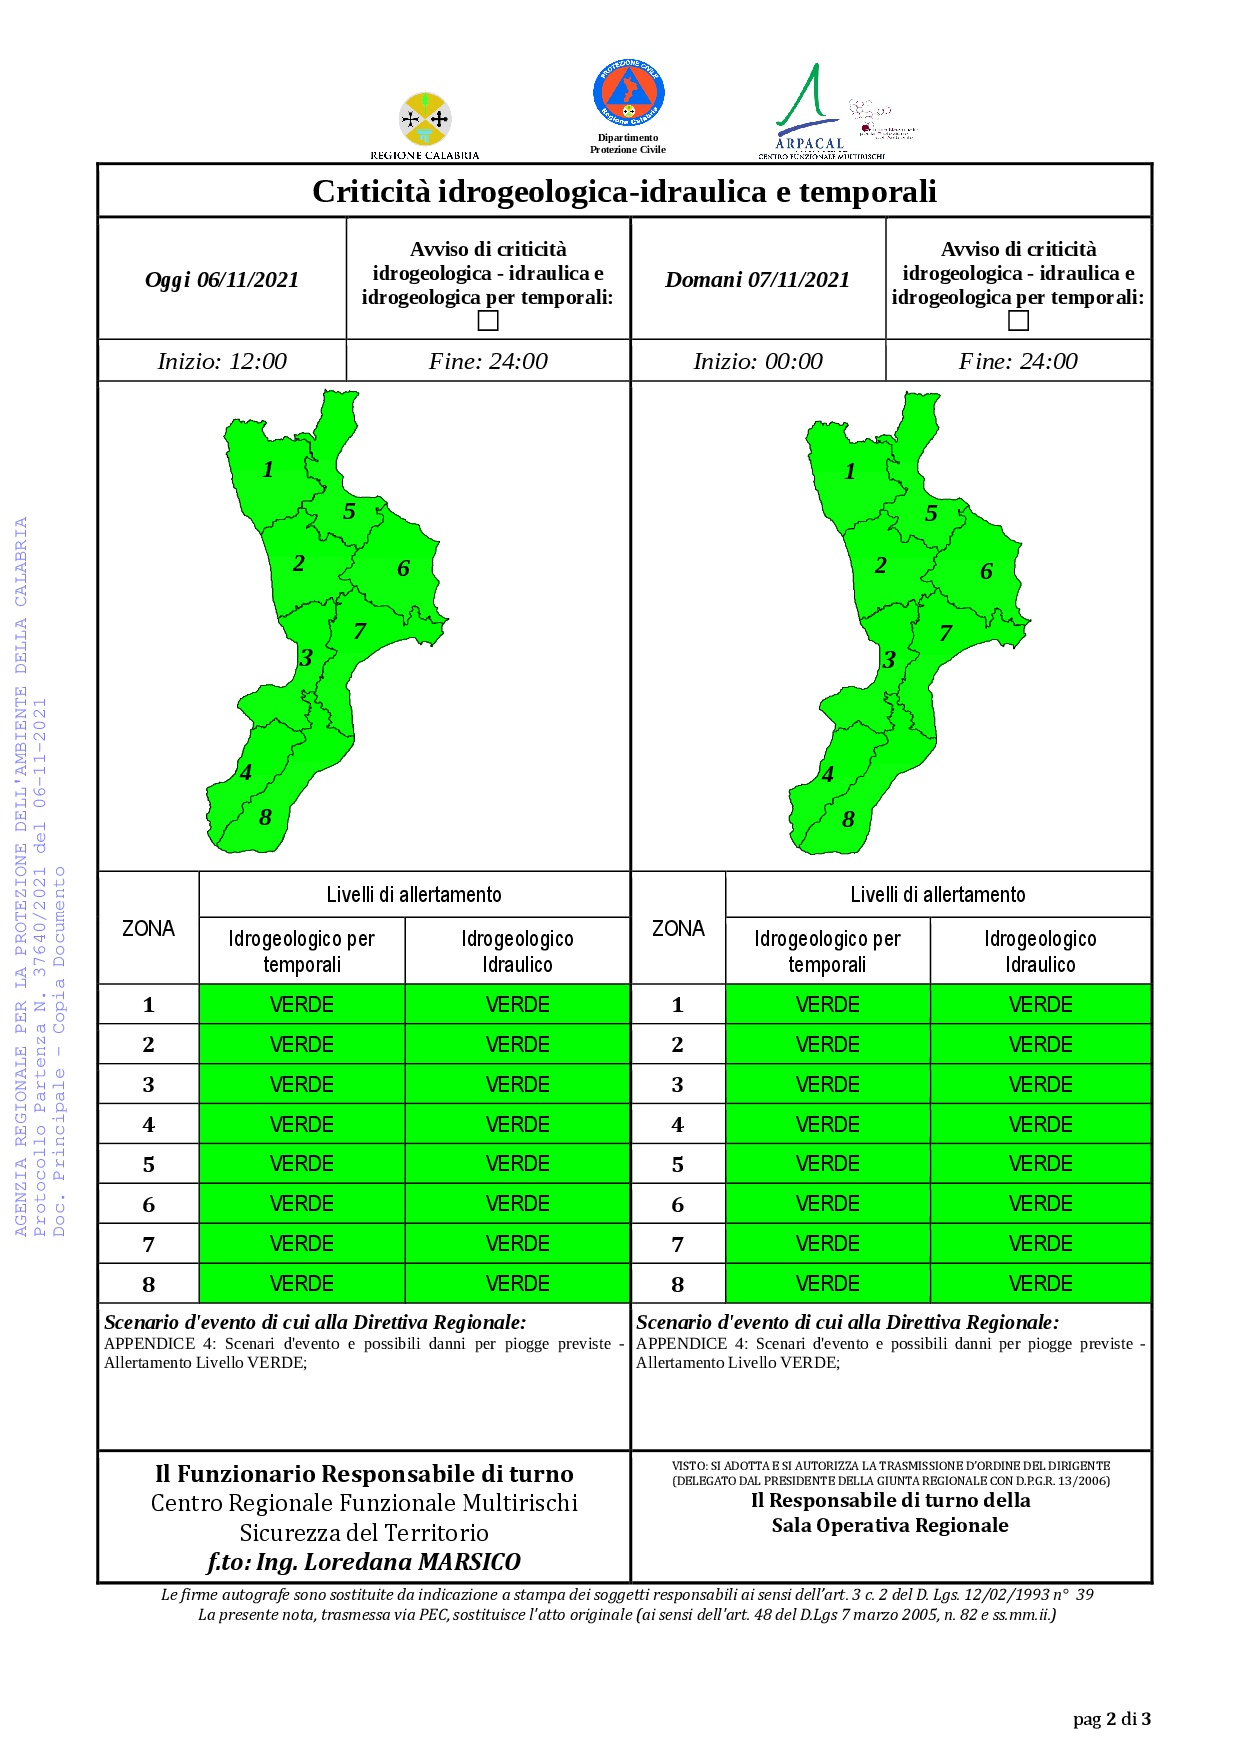 Criticità idrogeologica-idraulica e temporali in Calabria 06-11-2021